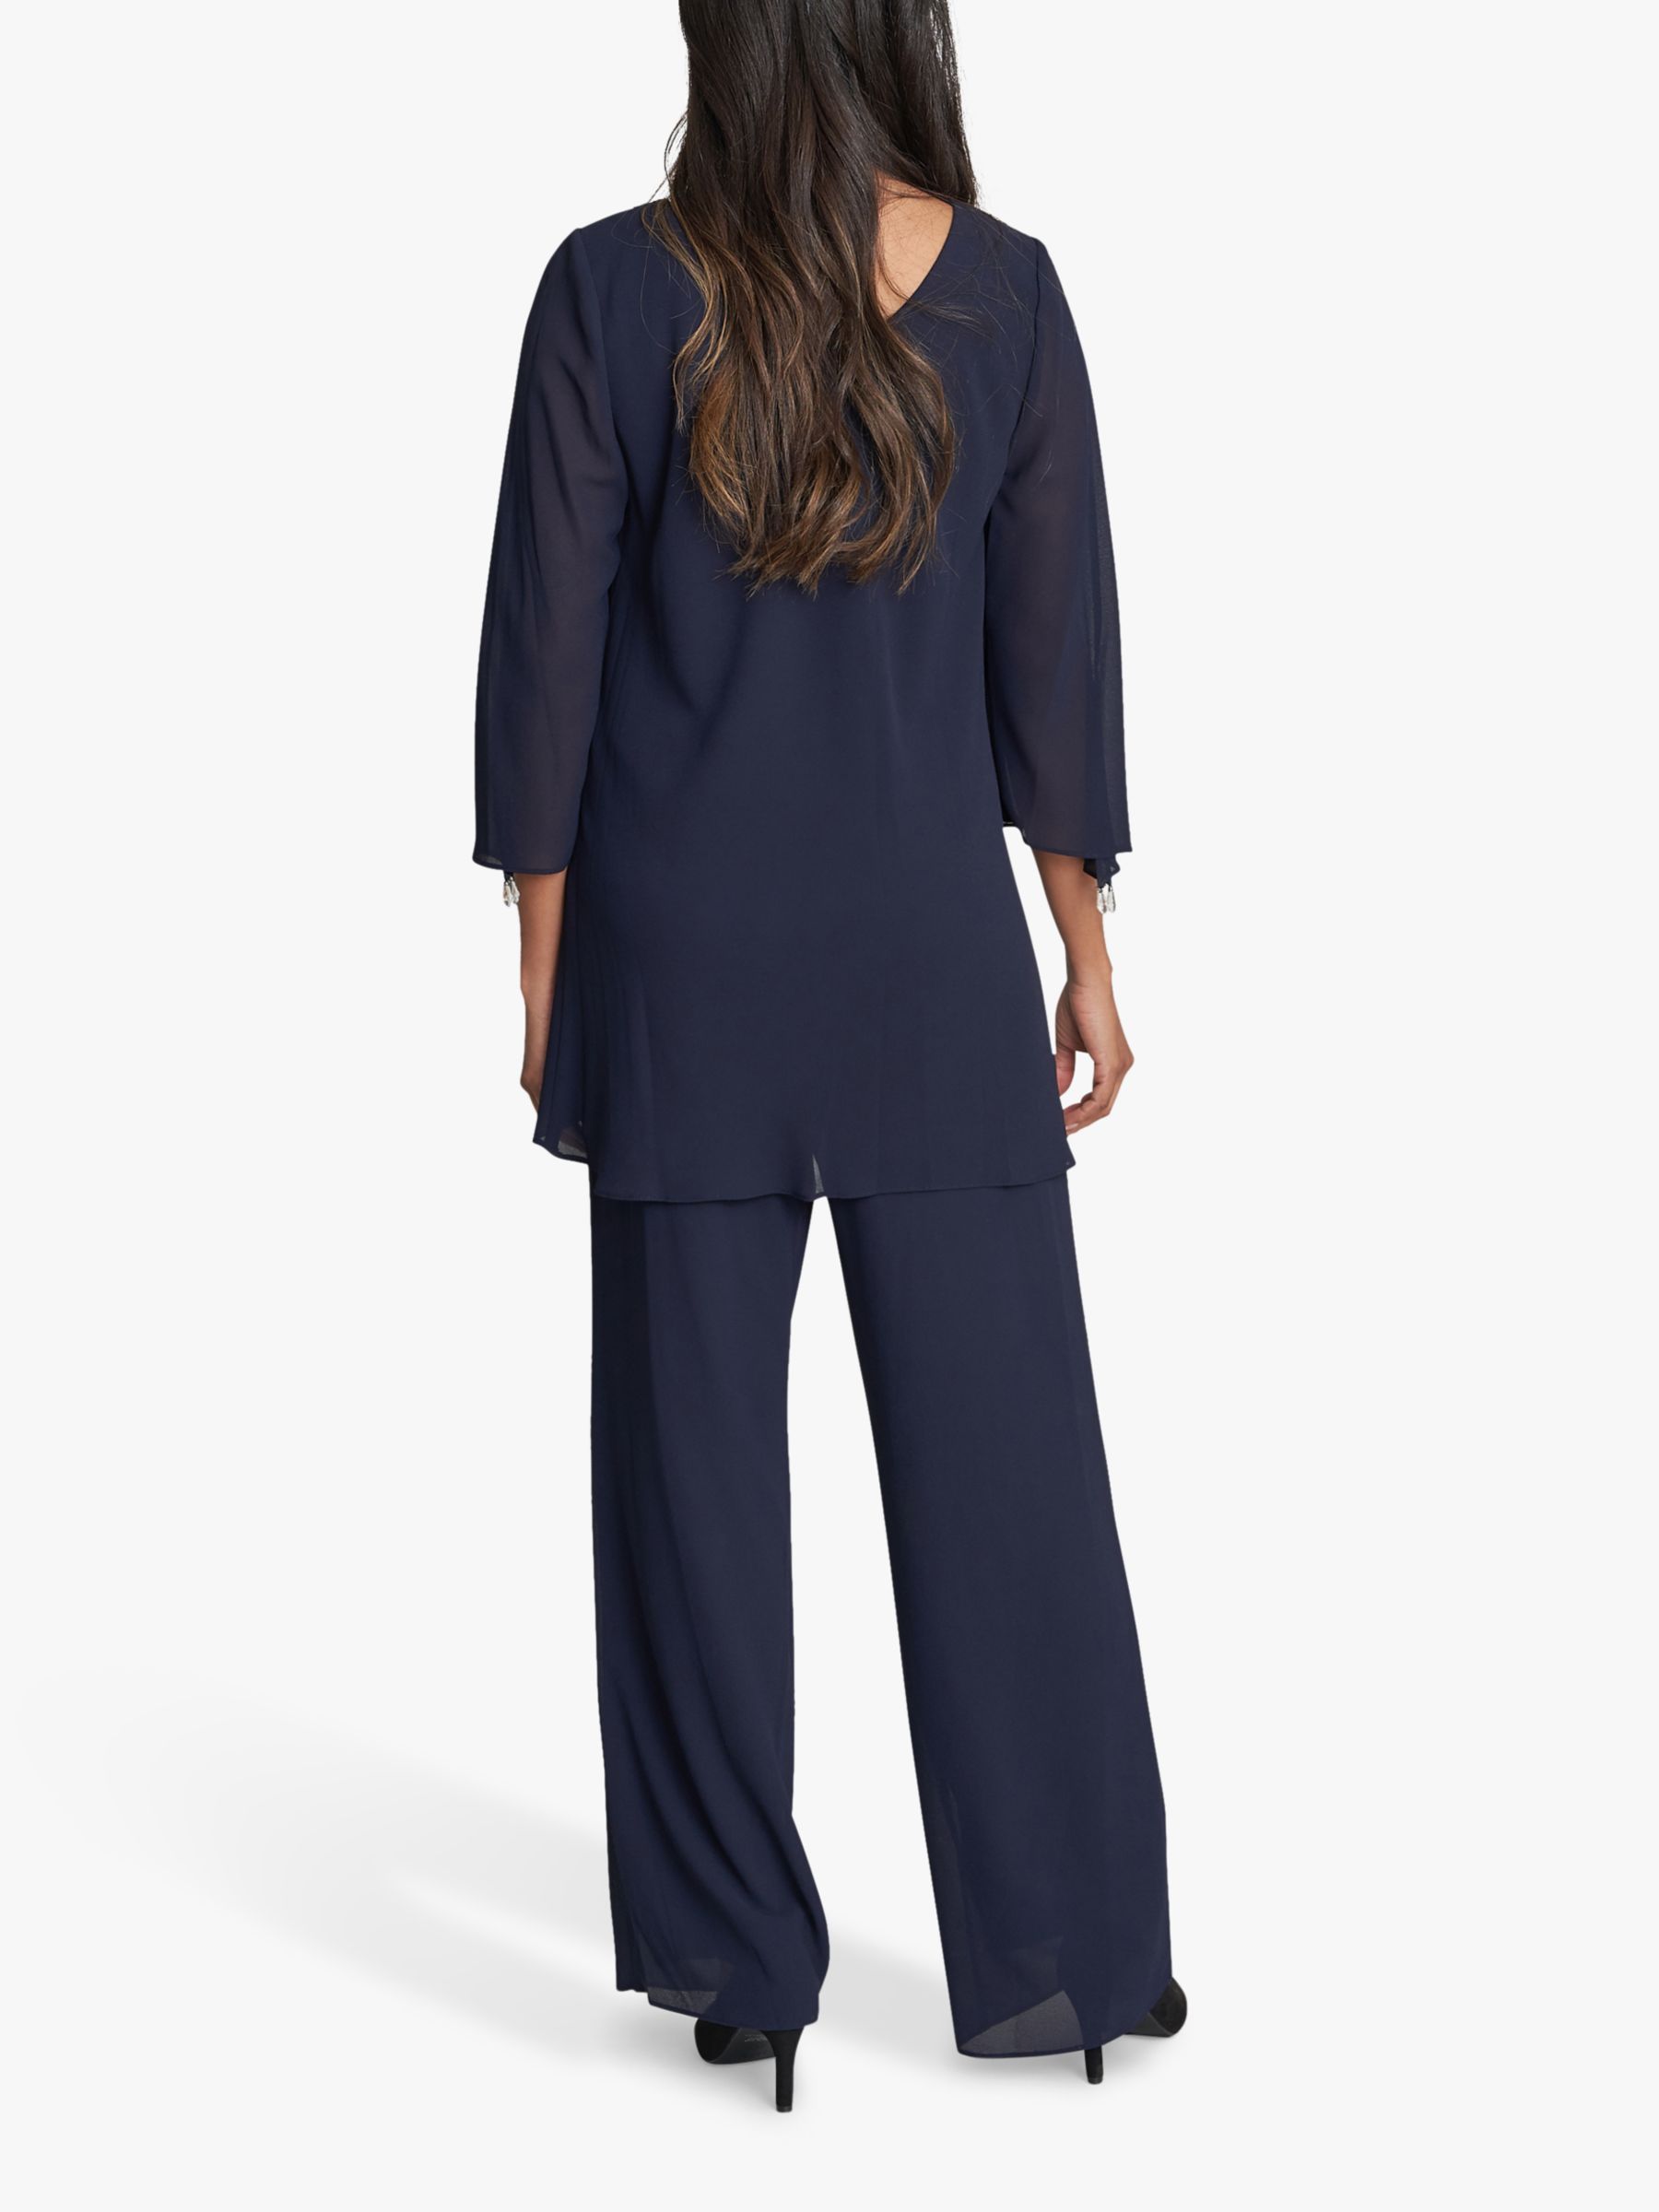 Asymmetric Navy Blue 2 Piece Pants Suits for Women, Chic Stylish